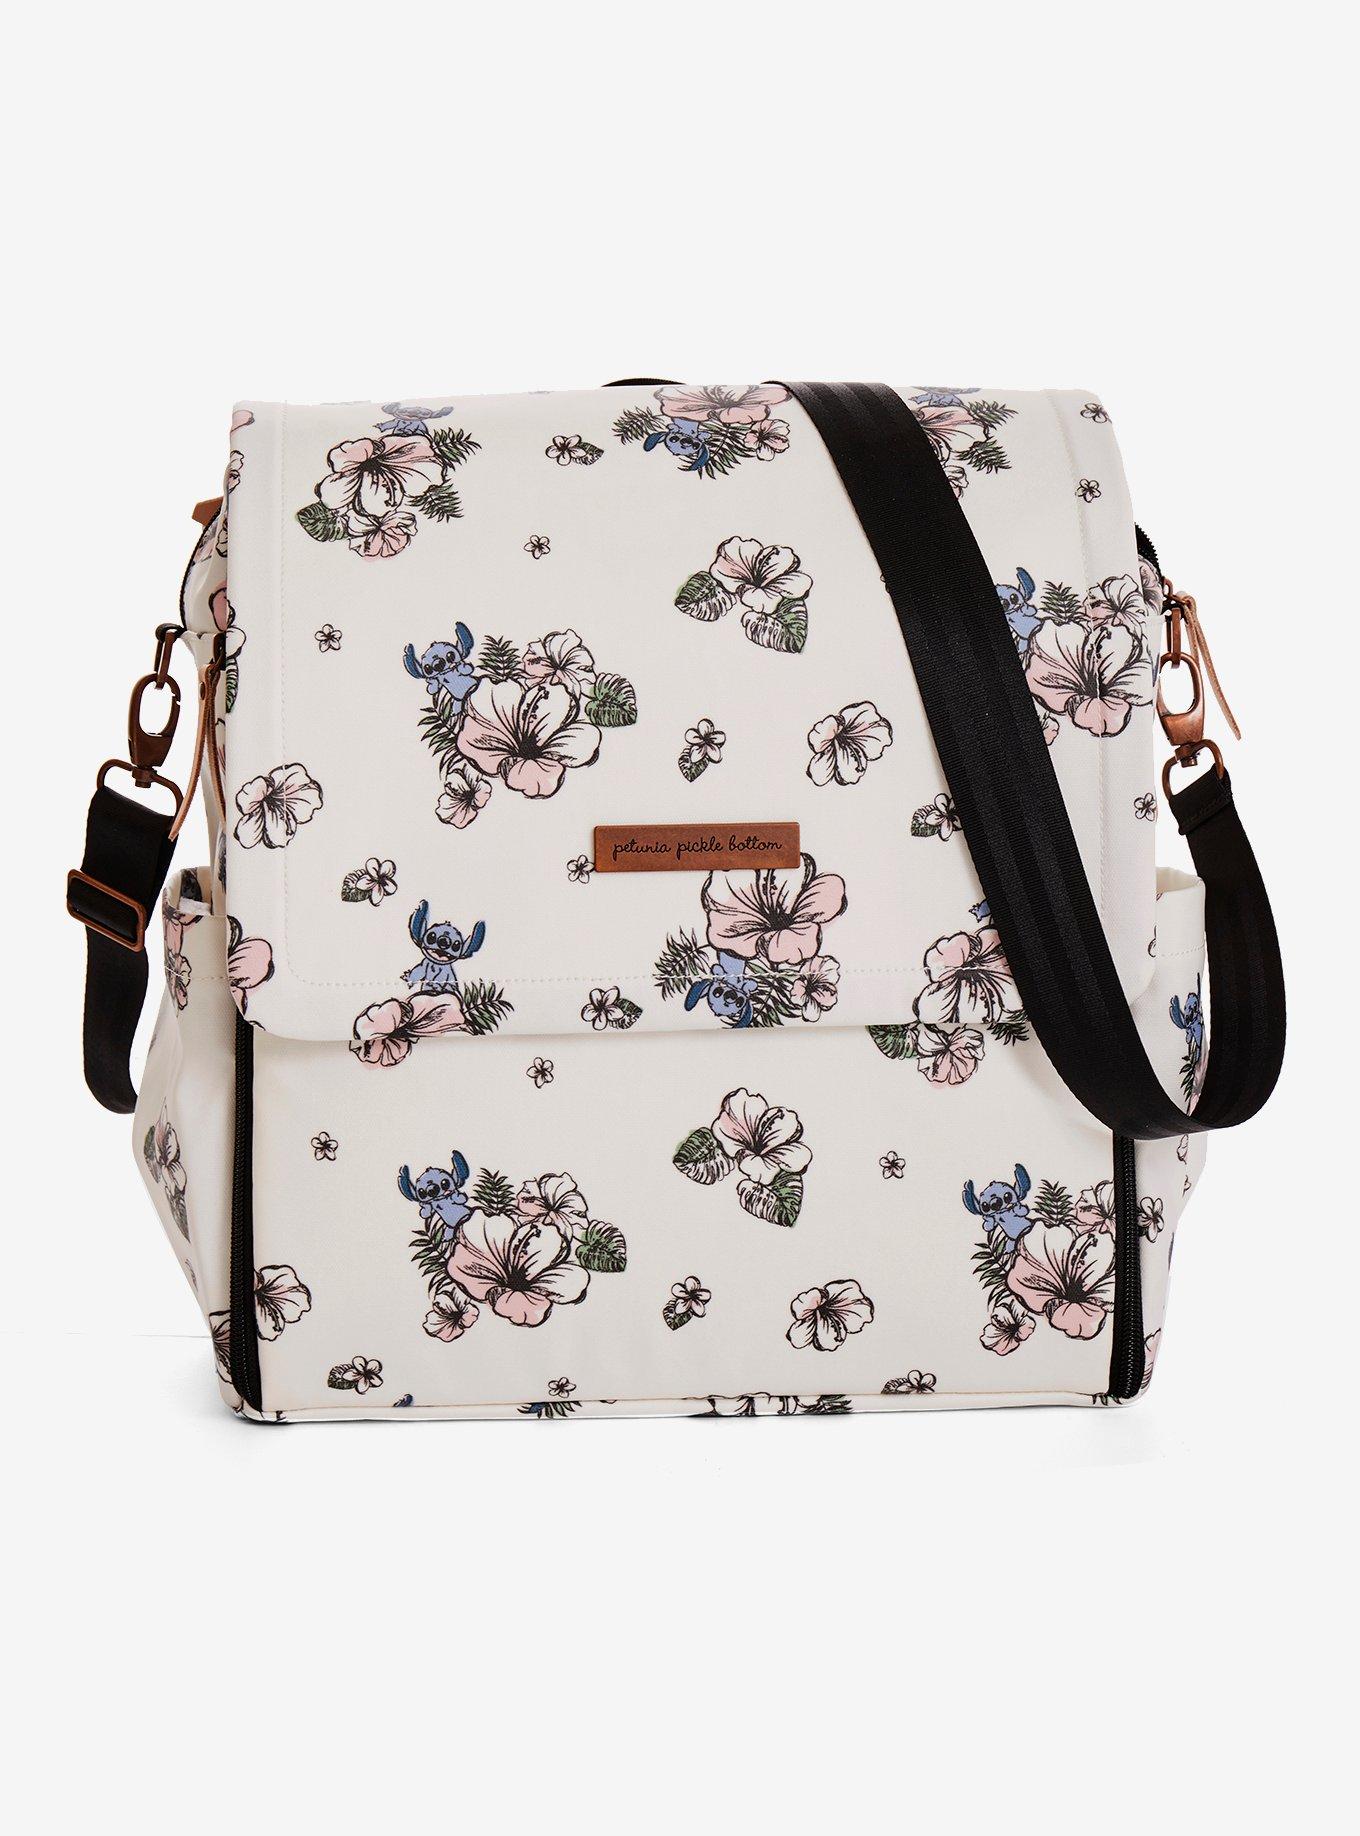 Petunia Pickle Bottom - Boxy Backpack (Winnie The Pooh)